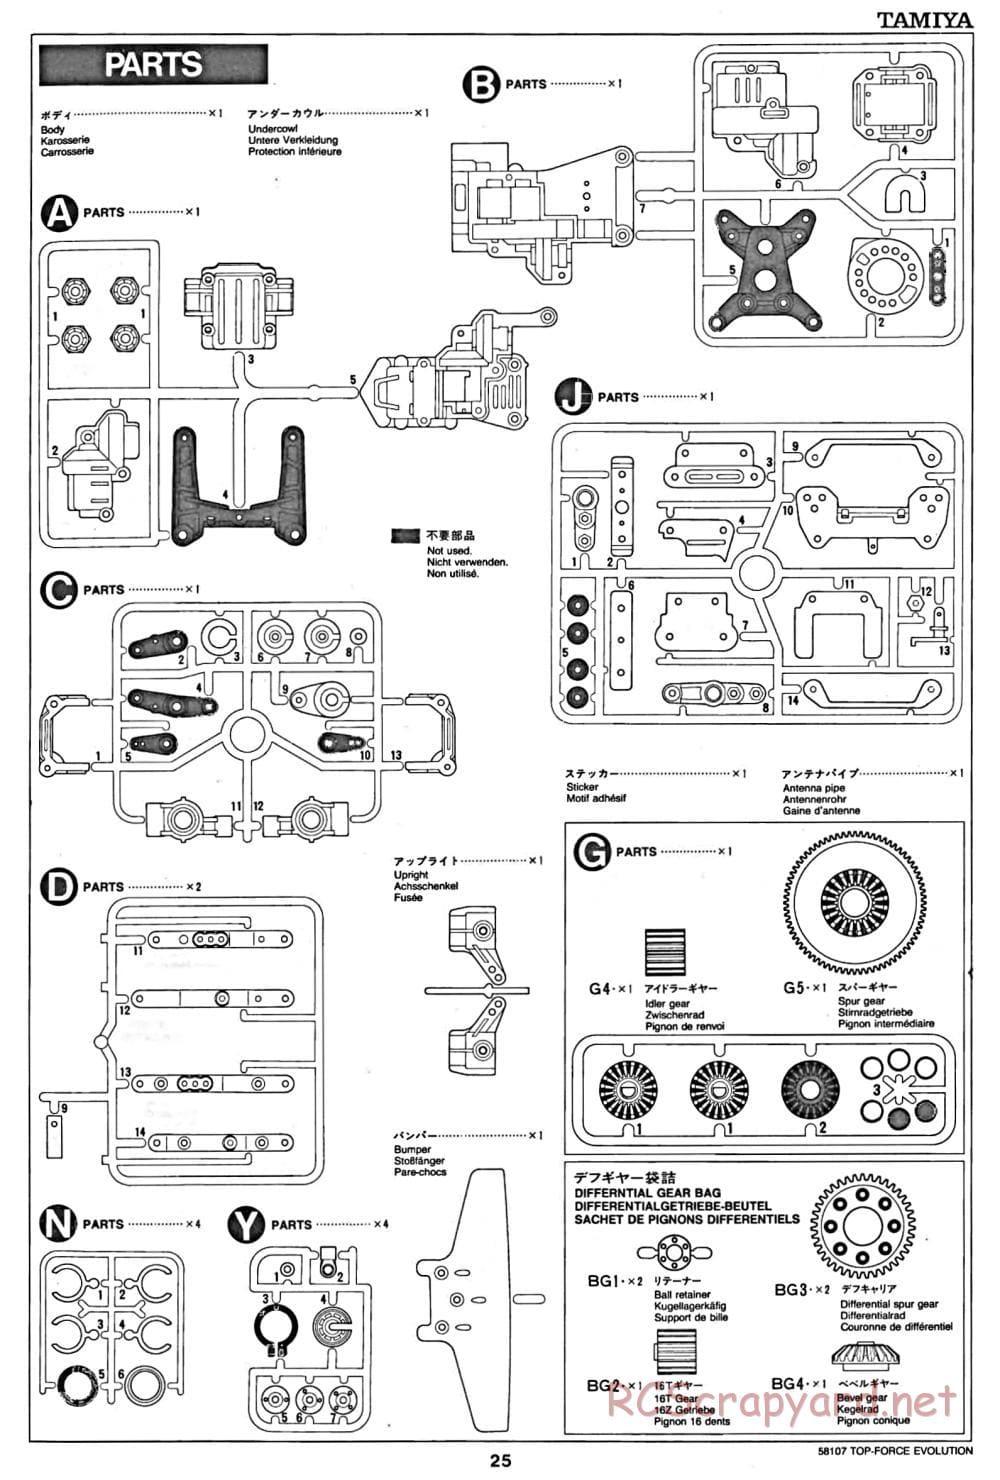 Tamiya - Top Force Evolution Chassis - Manual - Page 25